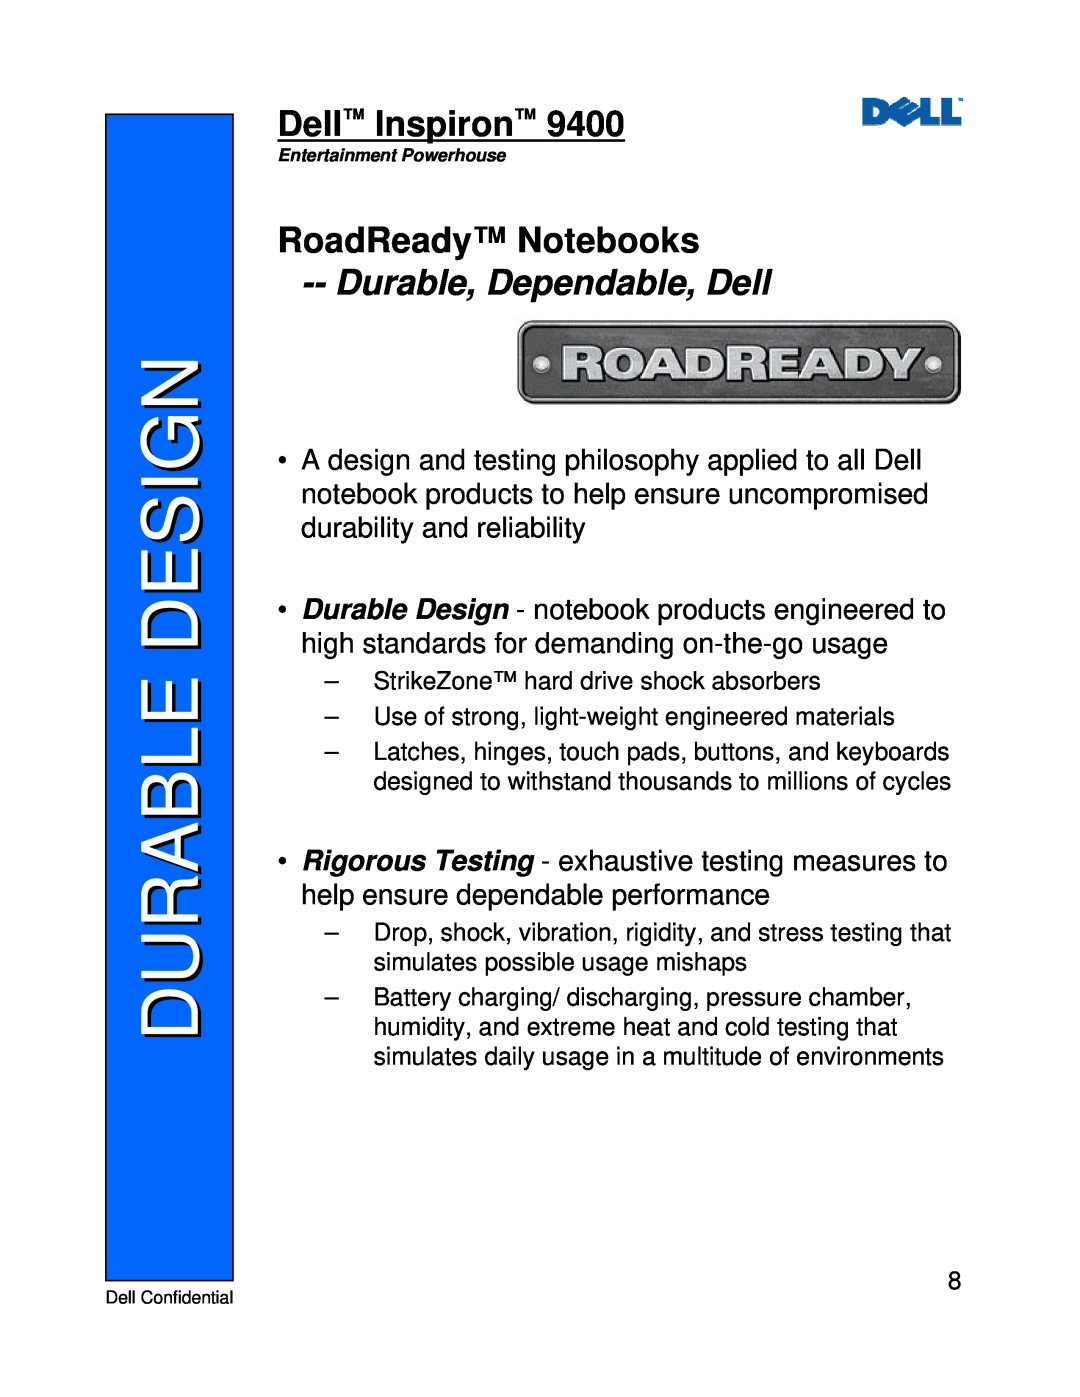 Dell 9400 manual Durable Design, RoadReady Notebooks, Dell Inspiron, Durable, Dependable, Dell 